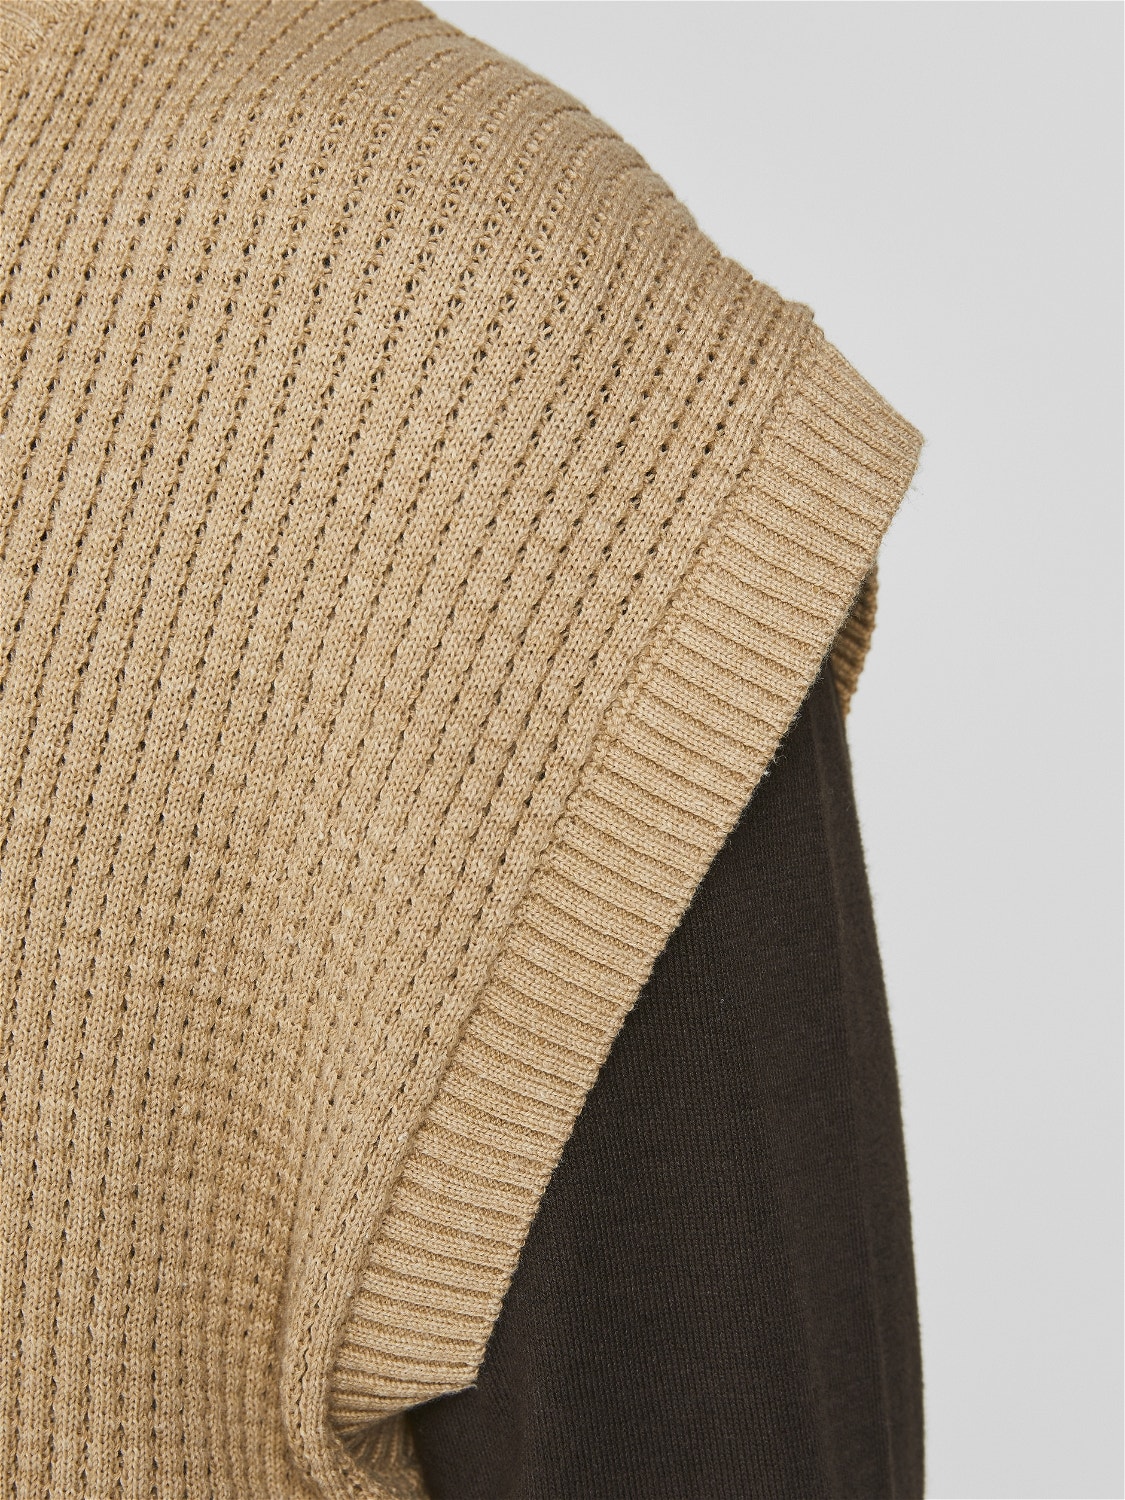 Jack & Jones Plain Knitted vest -Curds & Whey - 12204243